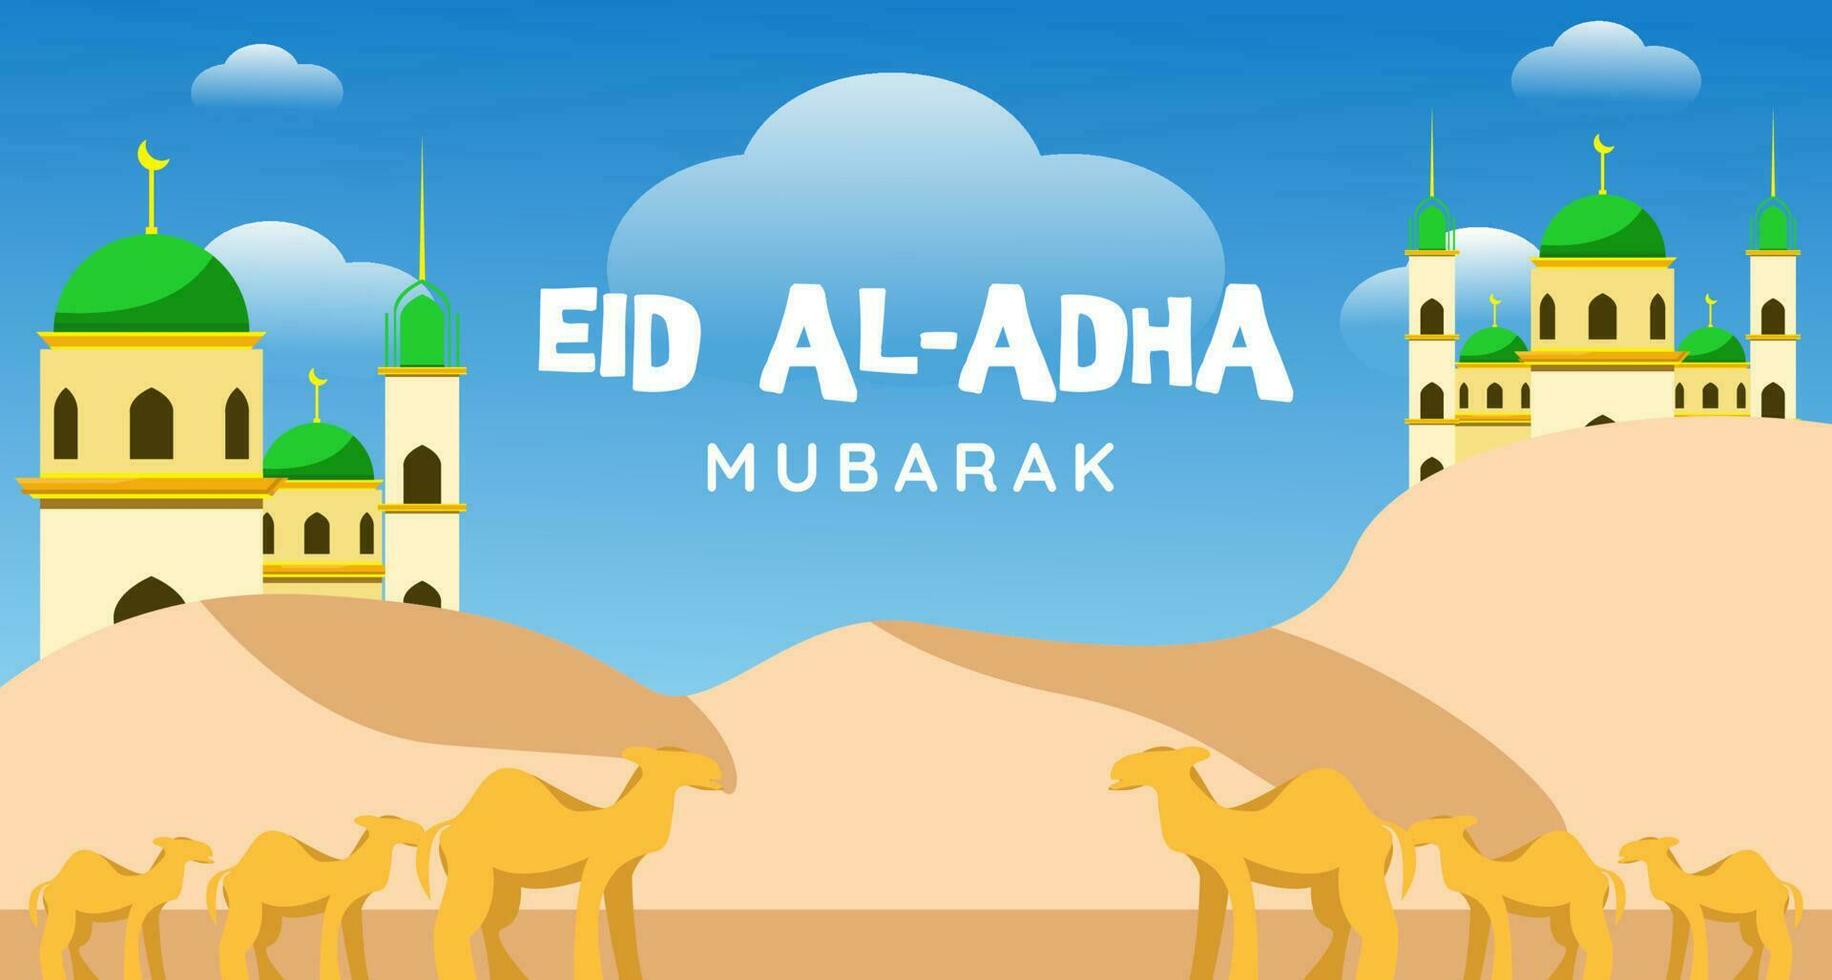 eid al adha, flat illustration design eid al adha greeting banner background with mosque decoration, camel animal in the desert vector